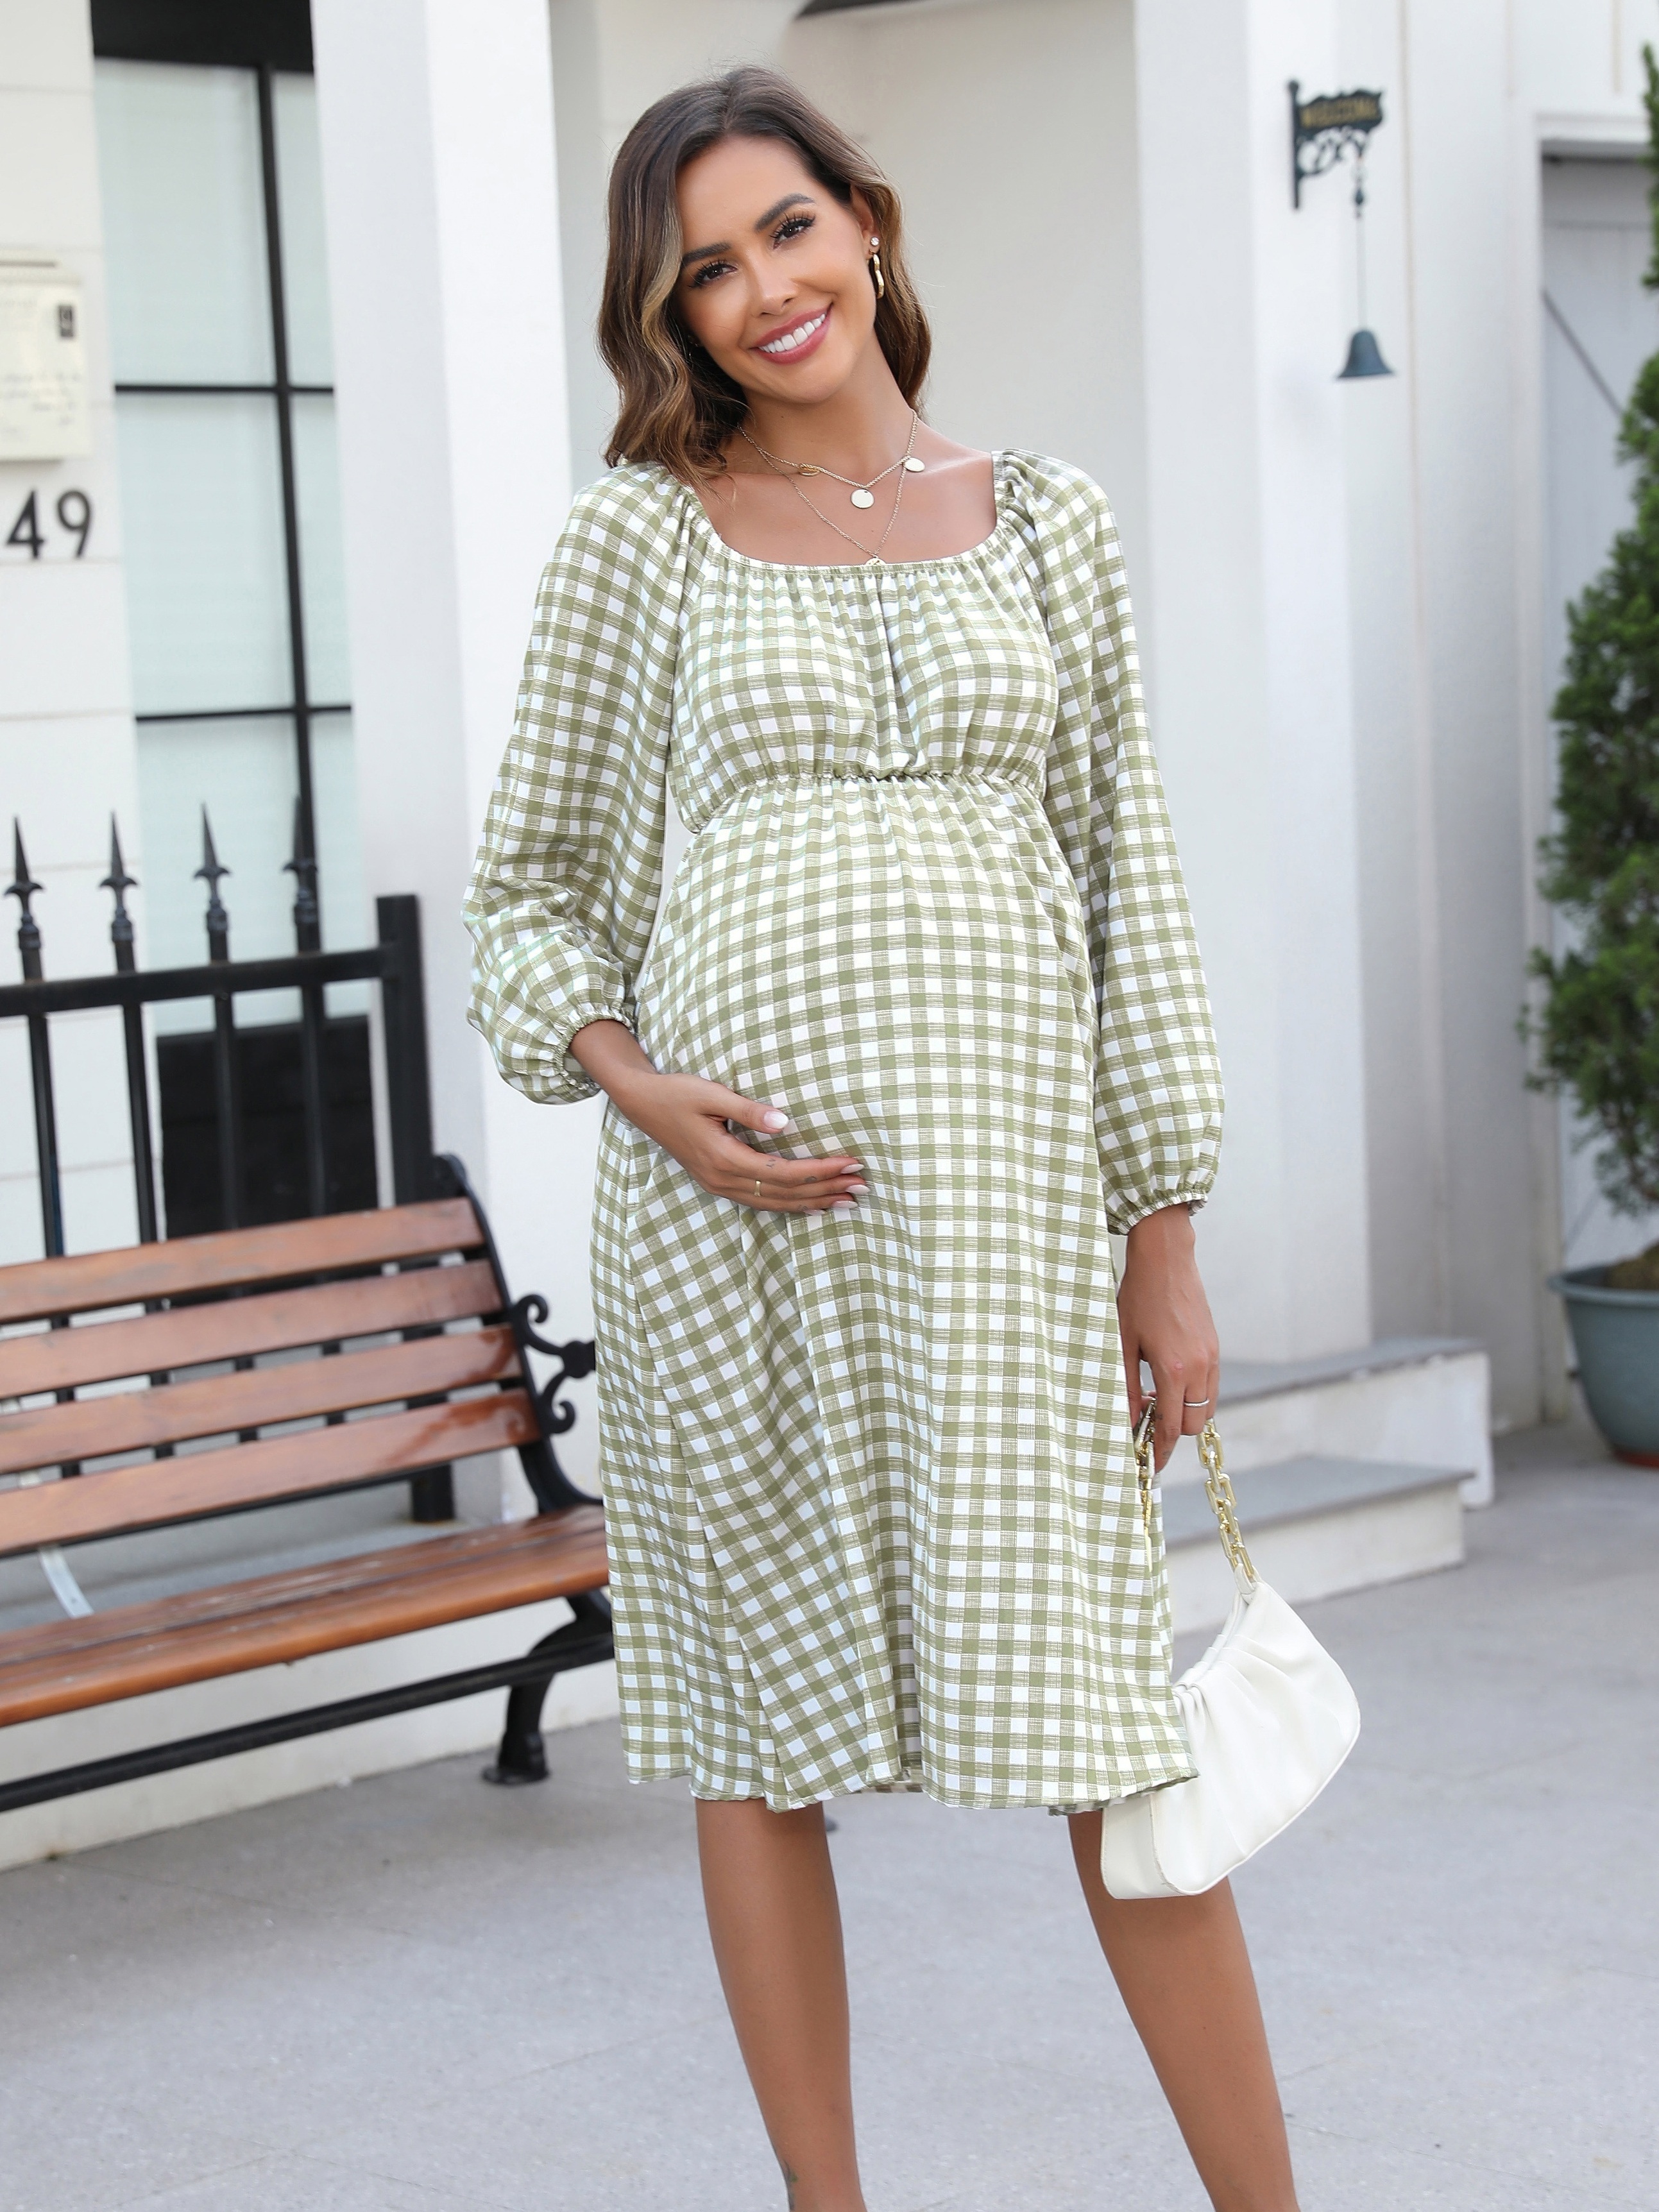 Stylish Lady Square Neck Long Sleeve Plaid Dress Maternity Dress